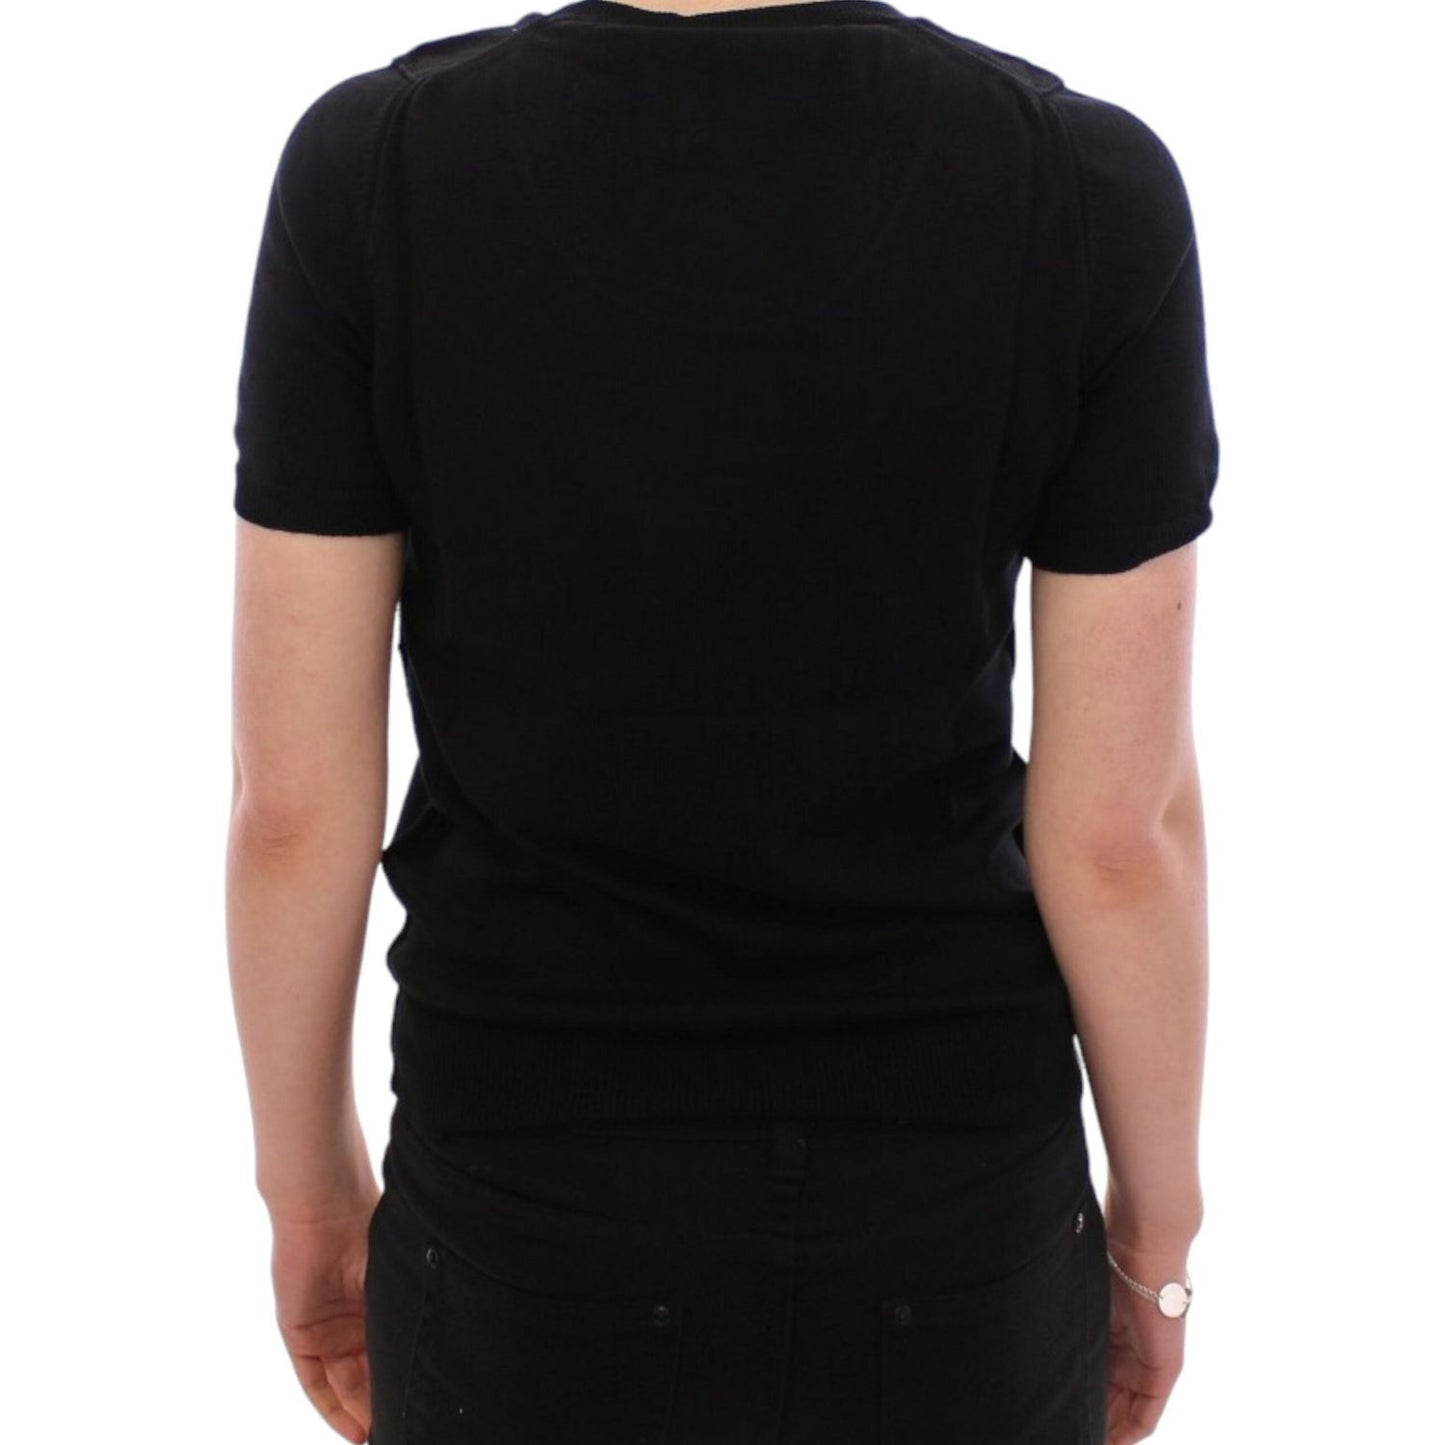 Dolce & Gabbana Black crewneck cotton t-shirt black-crewneck-cotton-t-shirt 27263-black-crewneck-cotton-t-shirt-3-1-scaled-0b2388a6-b62.jpg